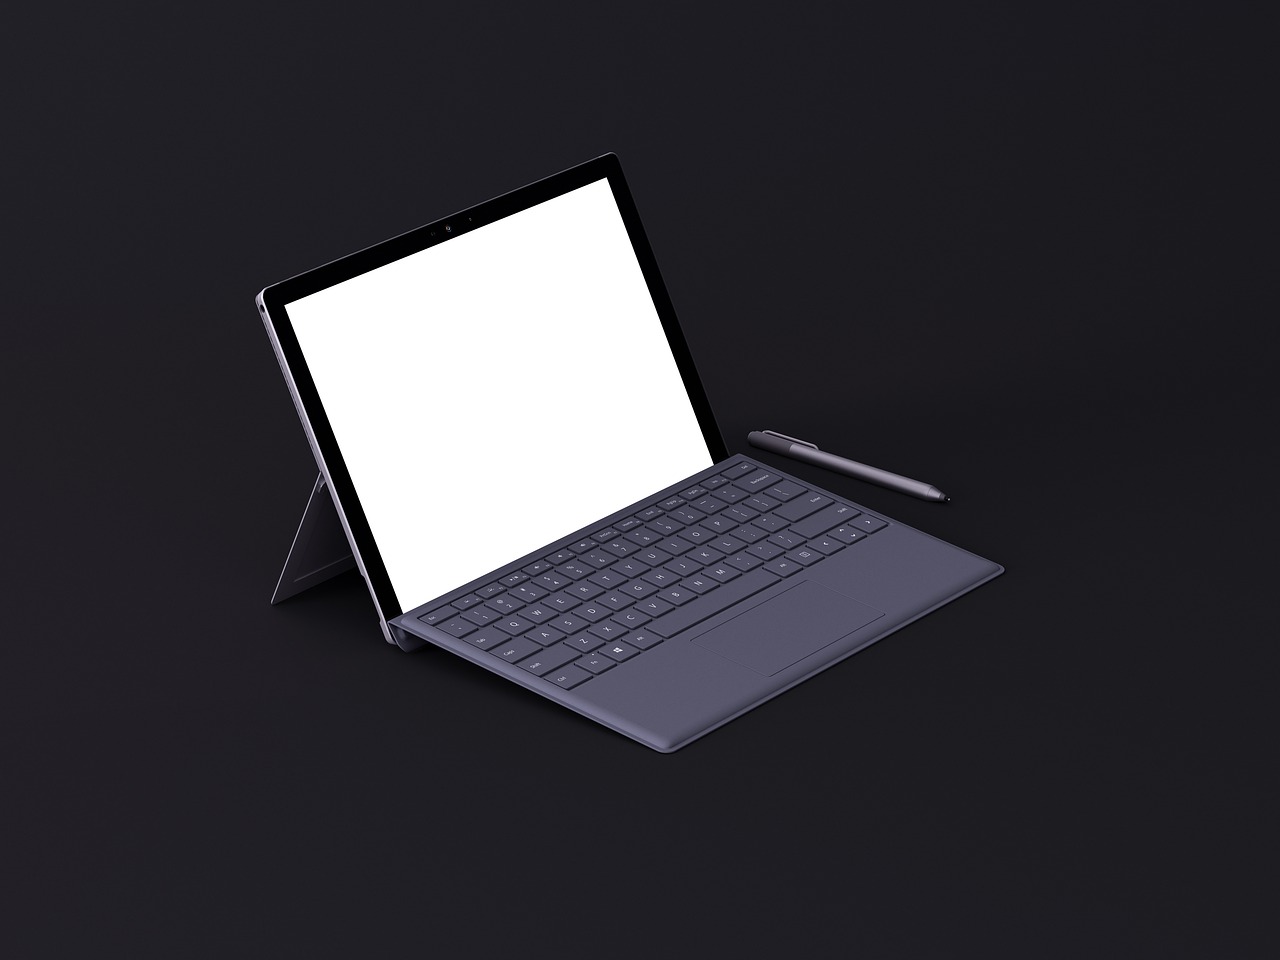 Laptop Surface Microsoft Microsoft  - Abdouj / Pixabay